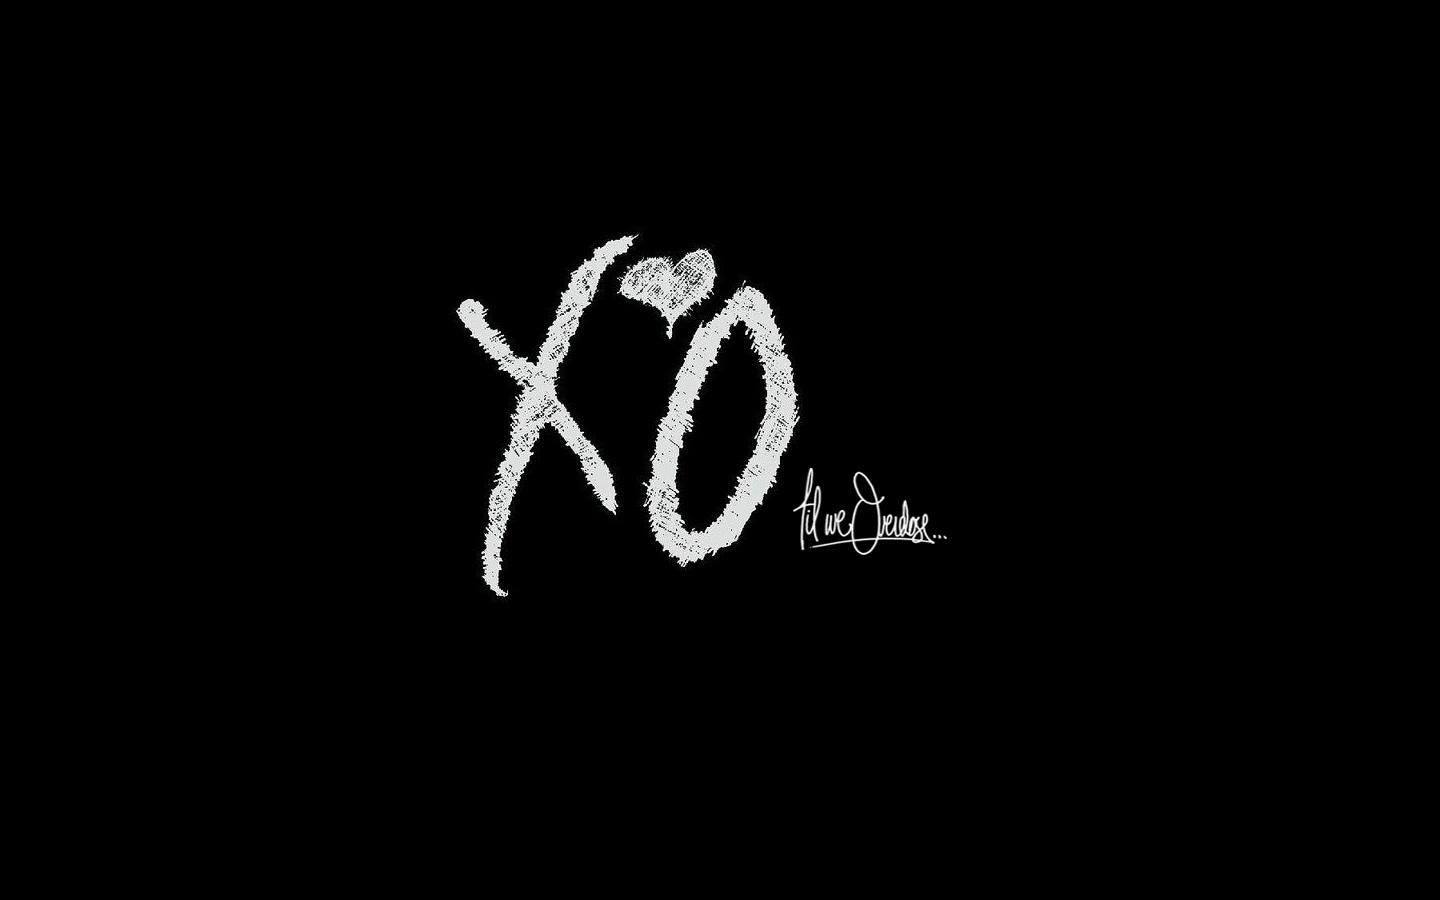 Xo Wallpaper The Weeknd Iphone 1440x900